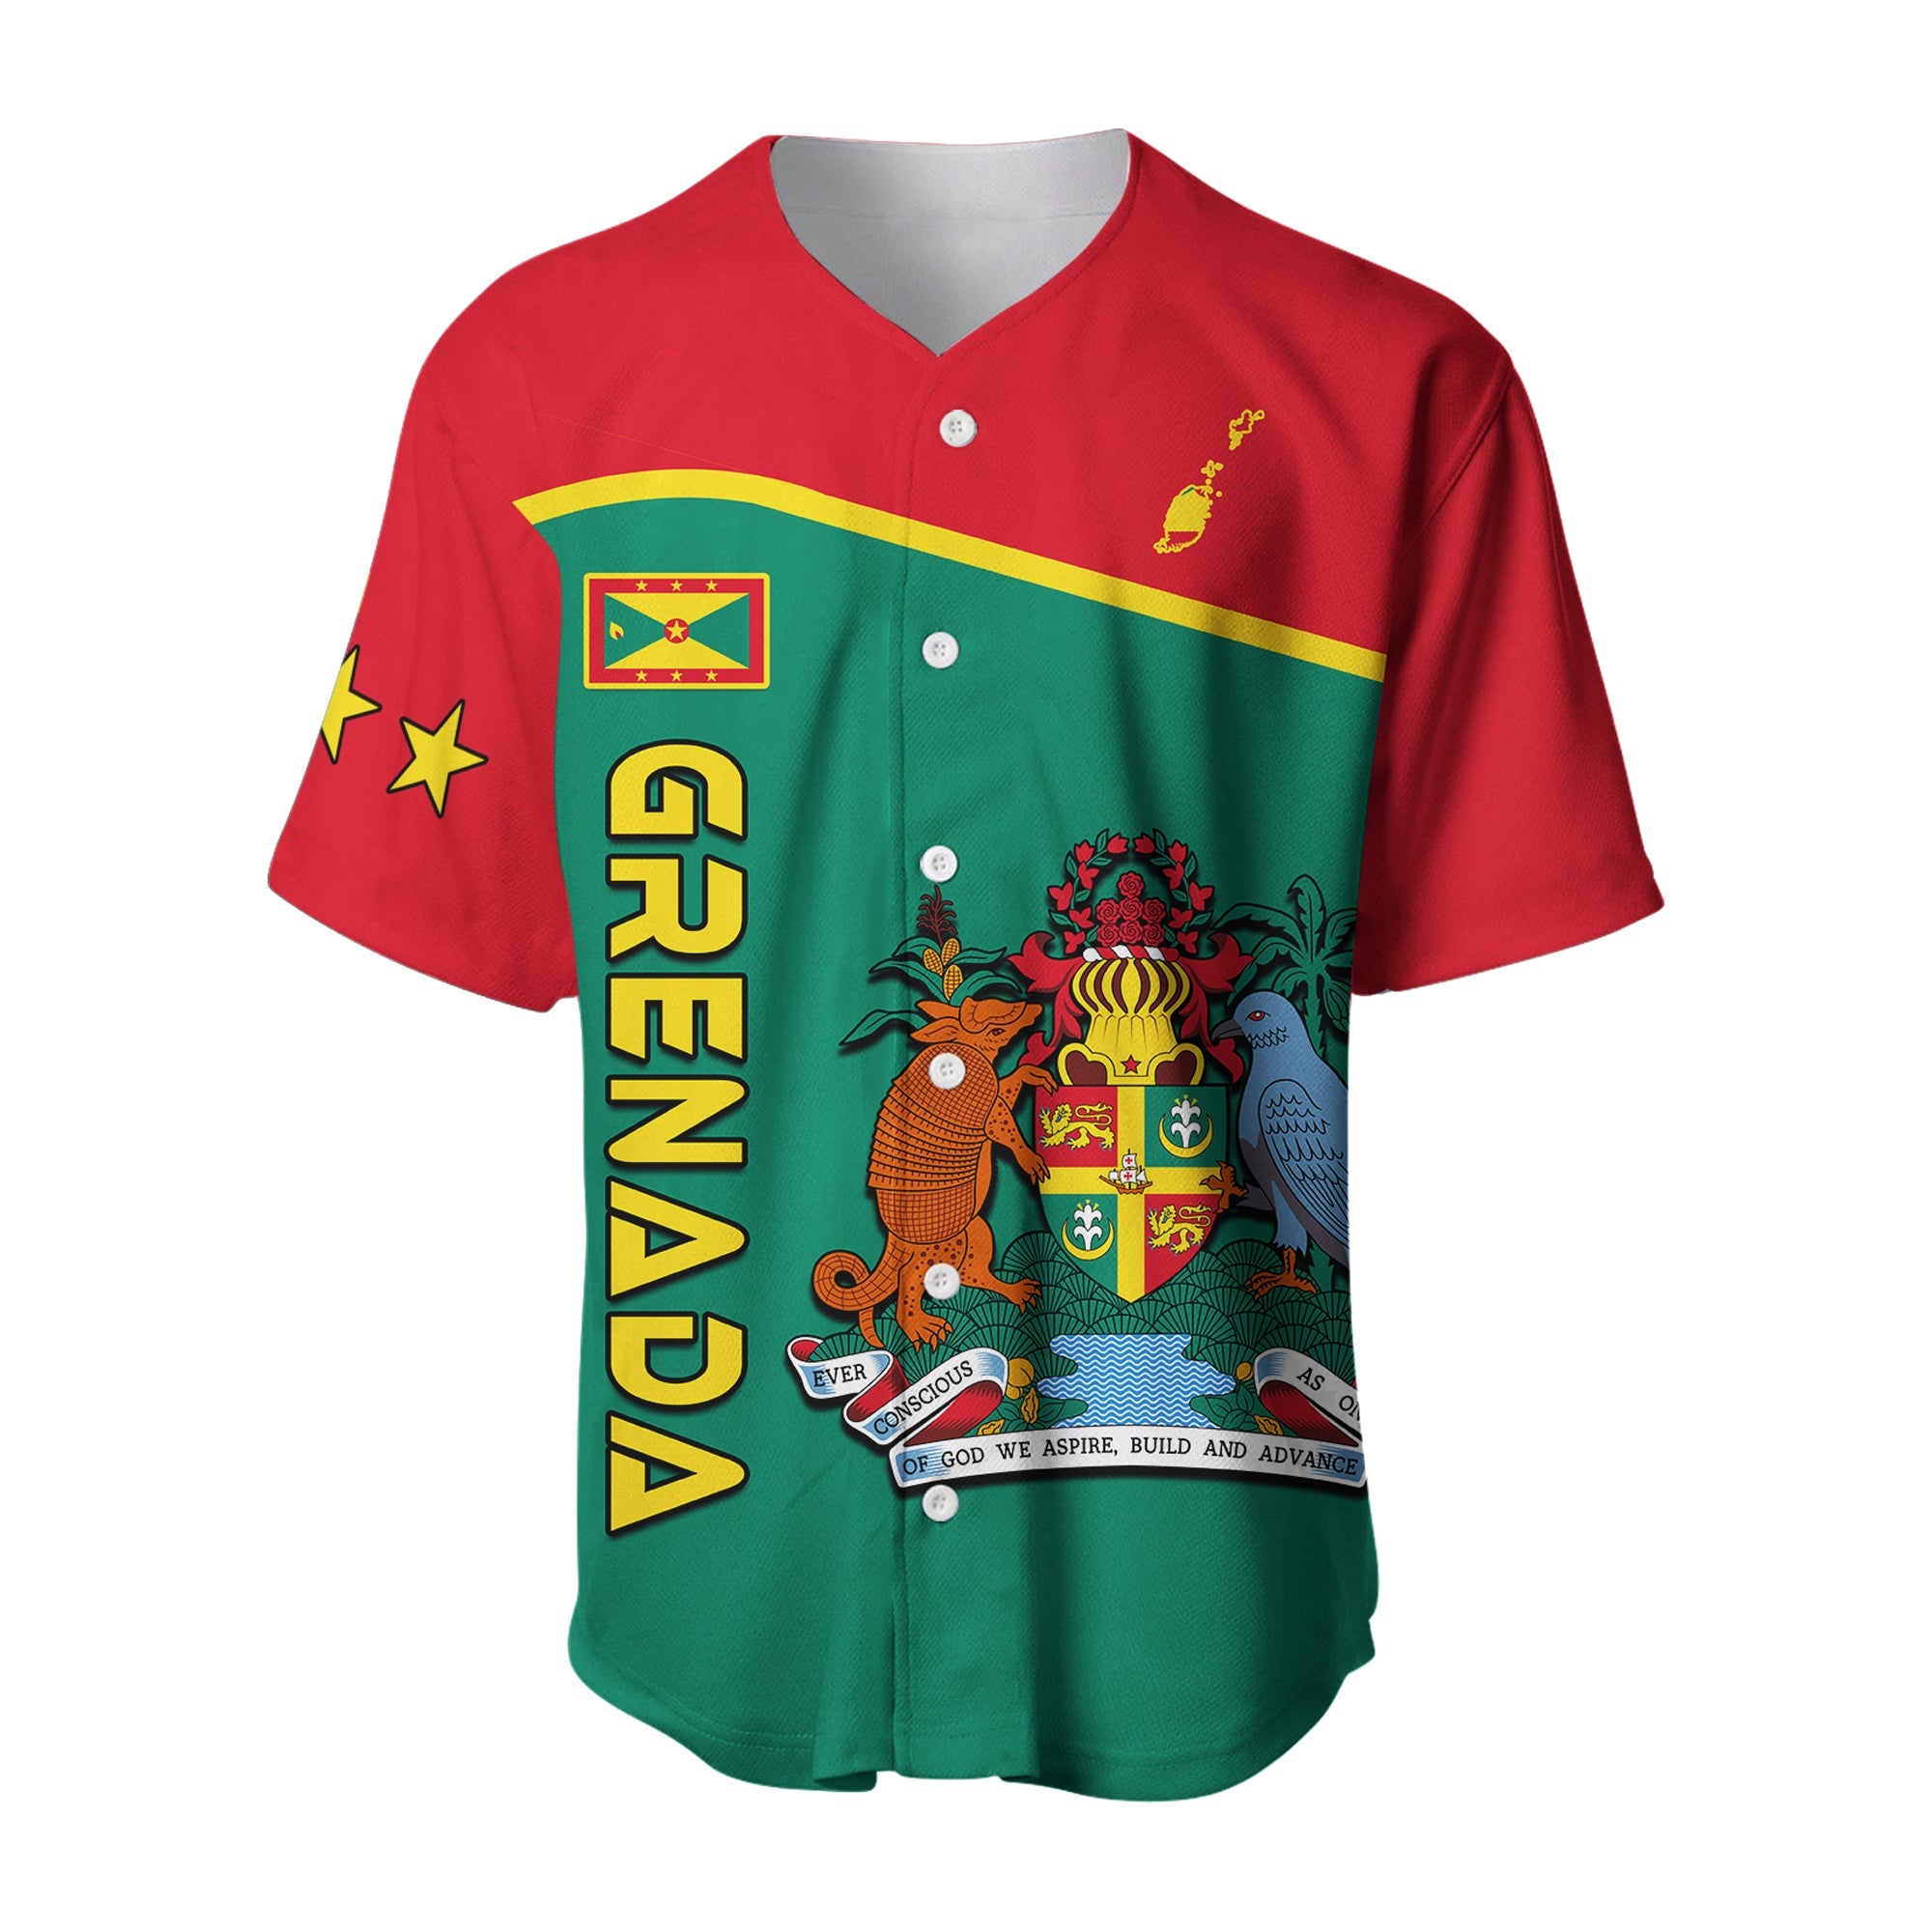 grenada-baseball-jersey-coat-of-arms-and-map-impressive